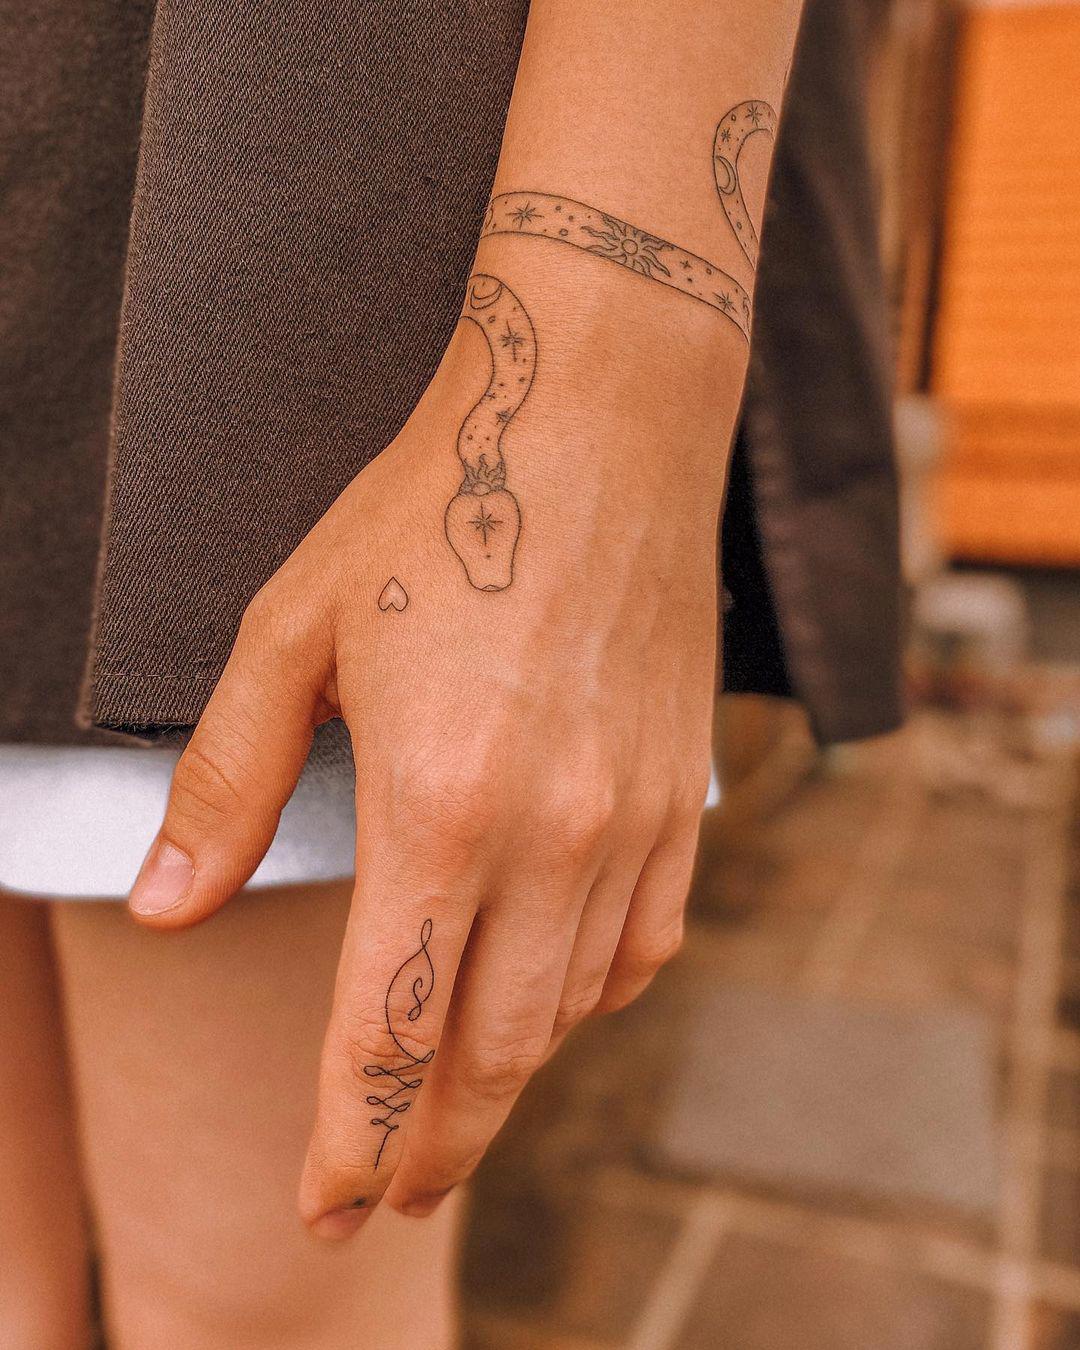 Tatuaje unalome en el dedo índice